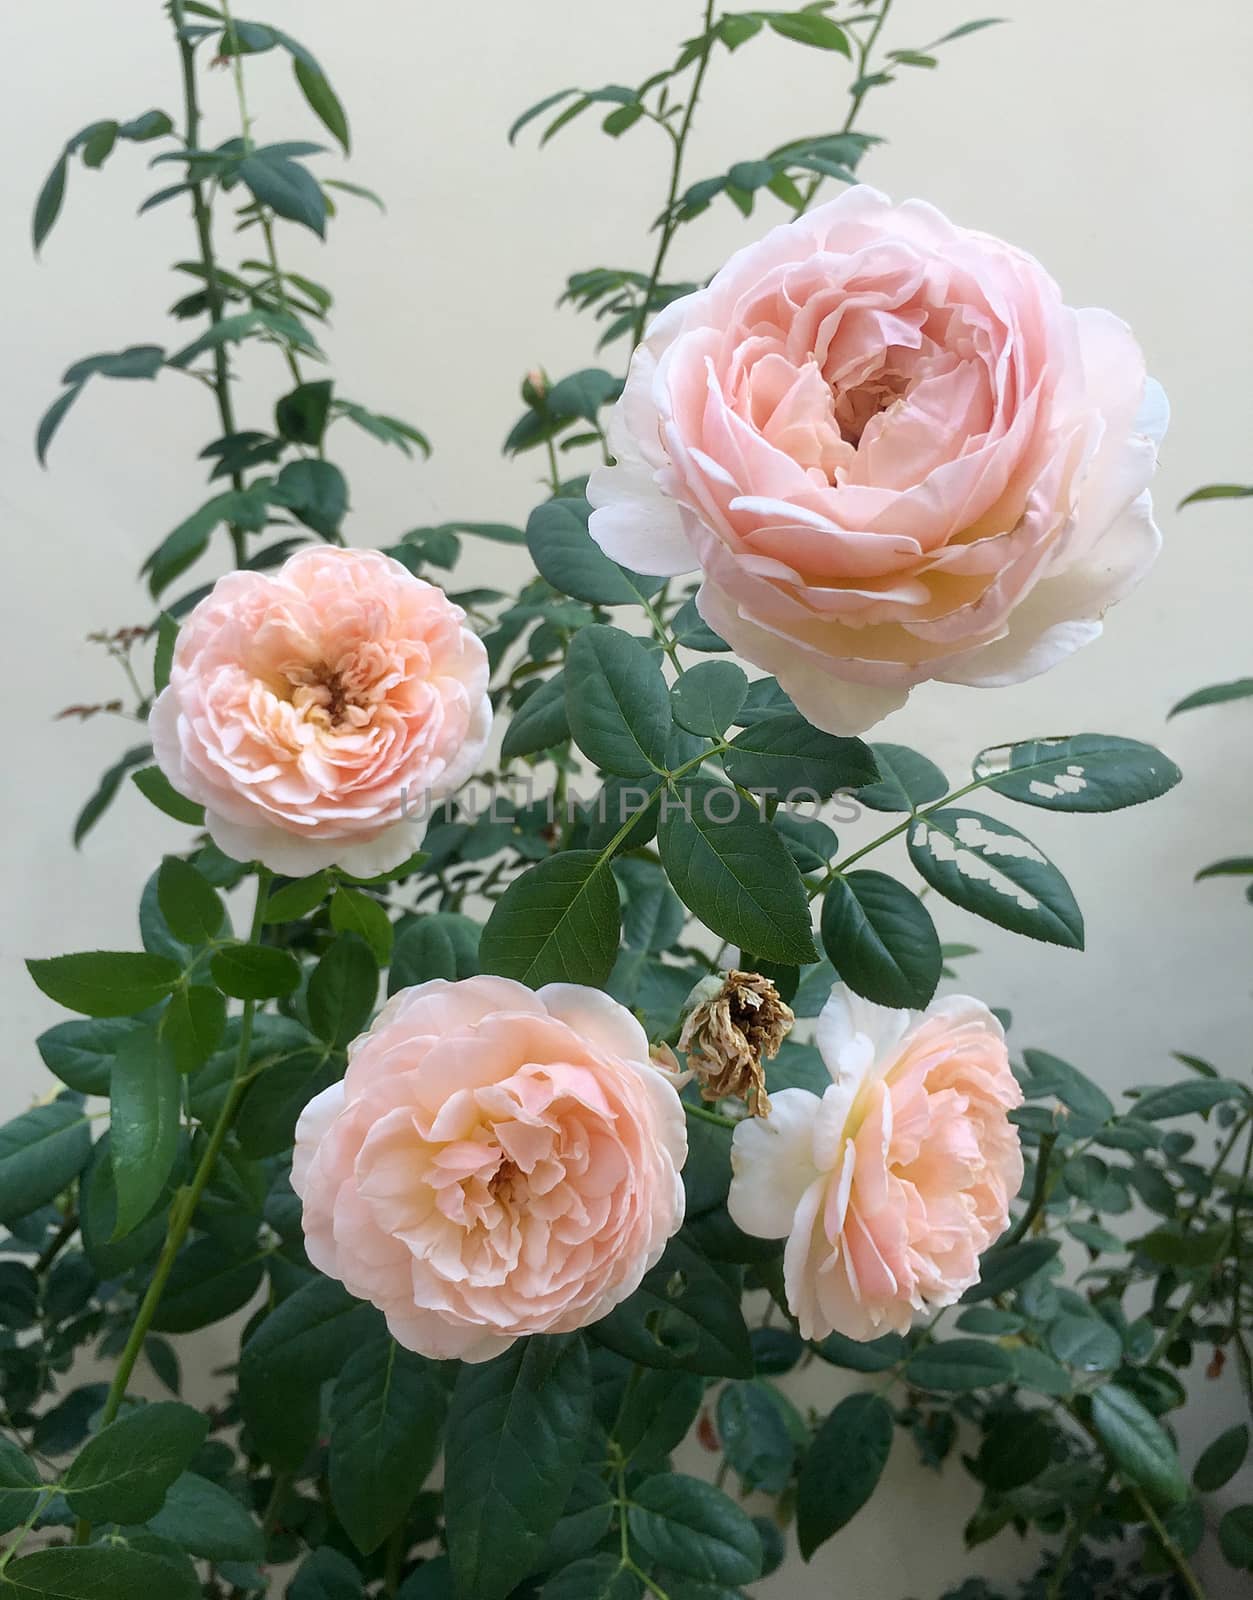 Beautiful English roses by ohhlanla